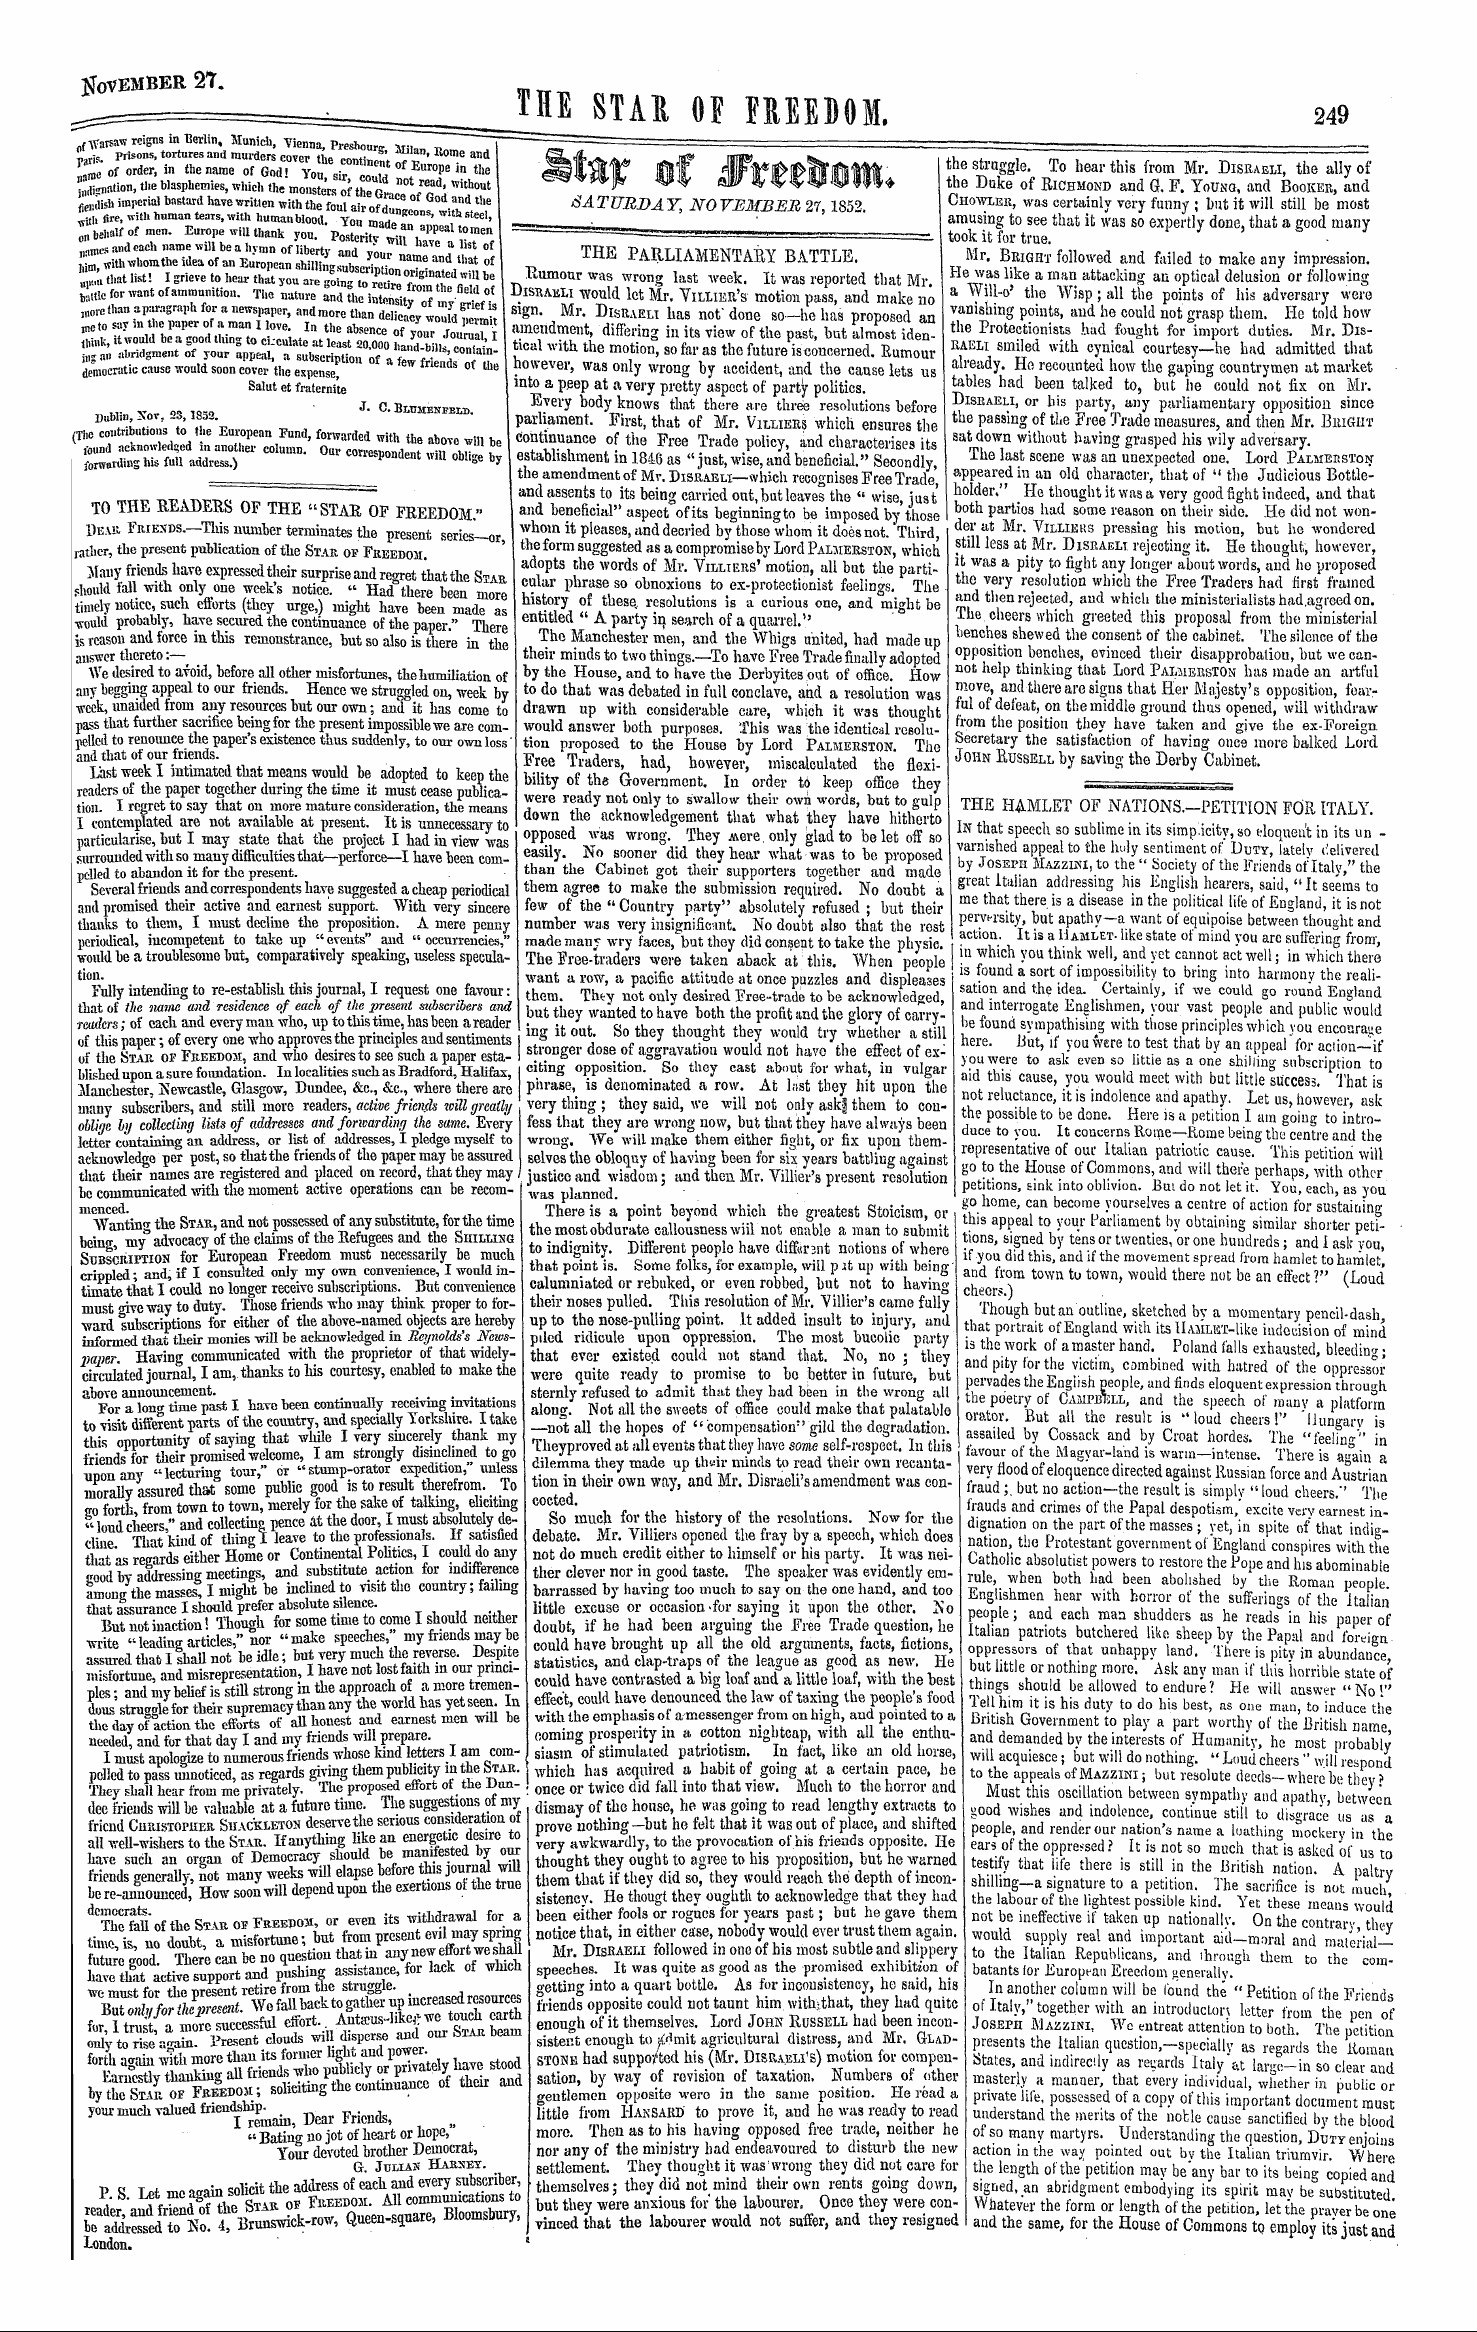 Northern Star (1837-1852): jS F Y, 1st edition - Tfatsaw Reigns M Berlin Munich Vienna